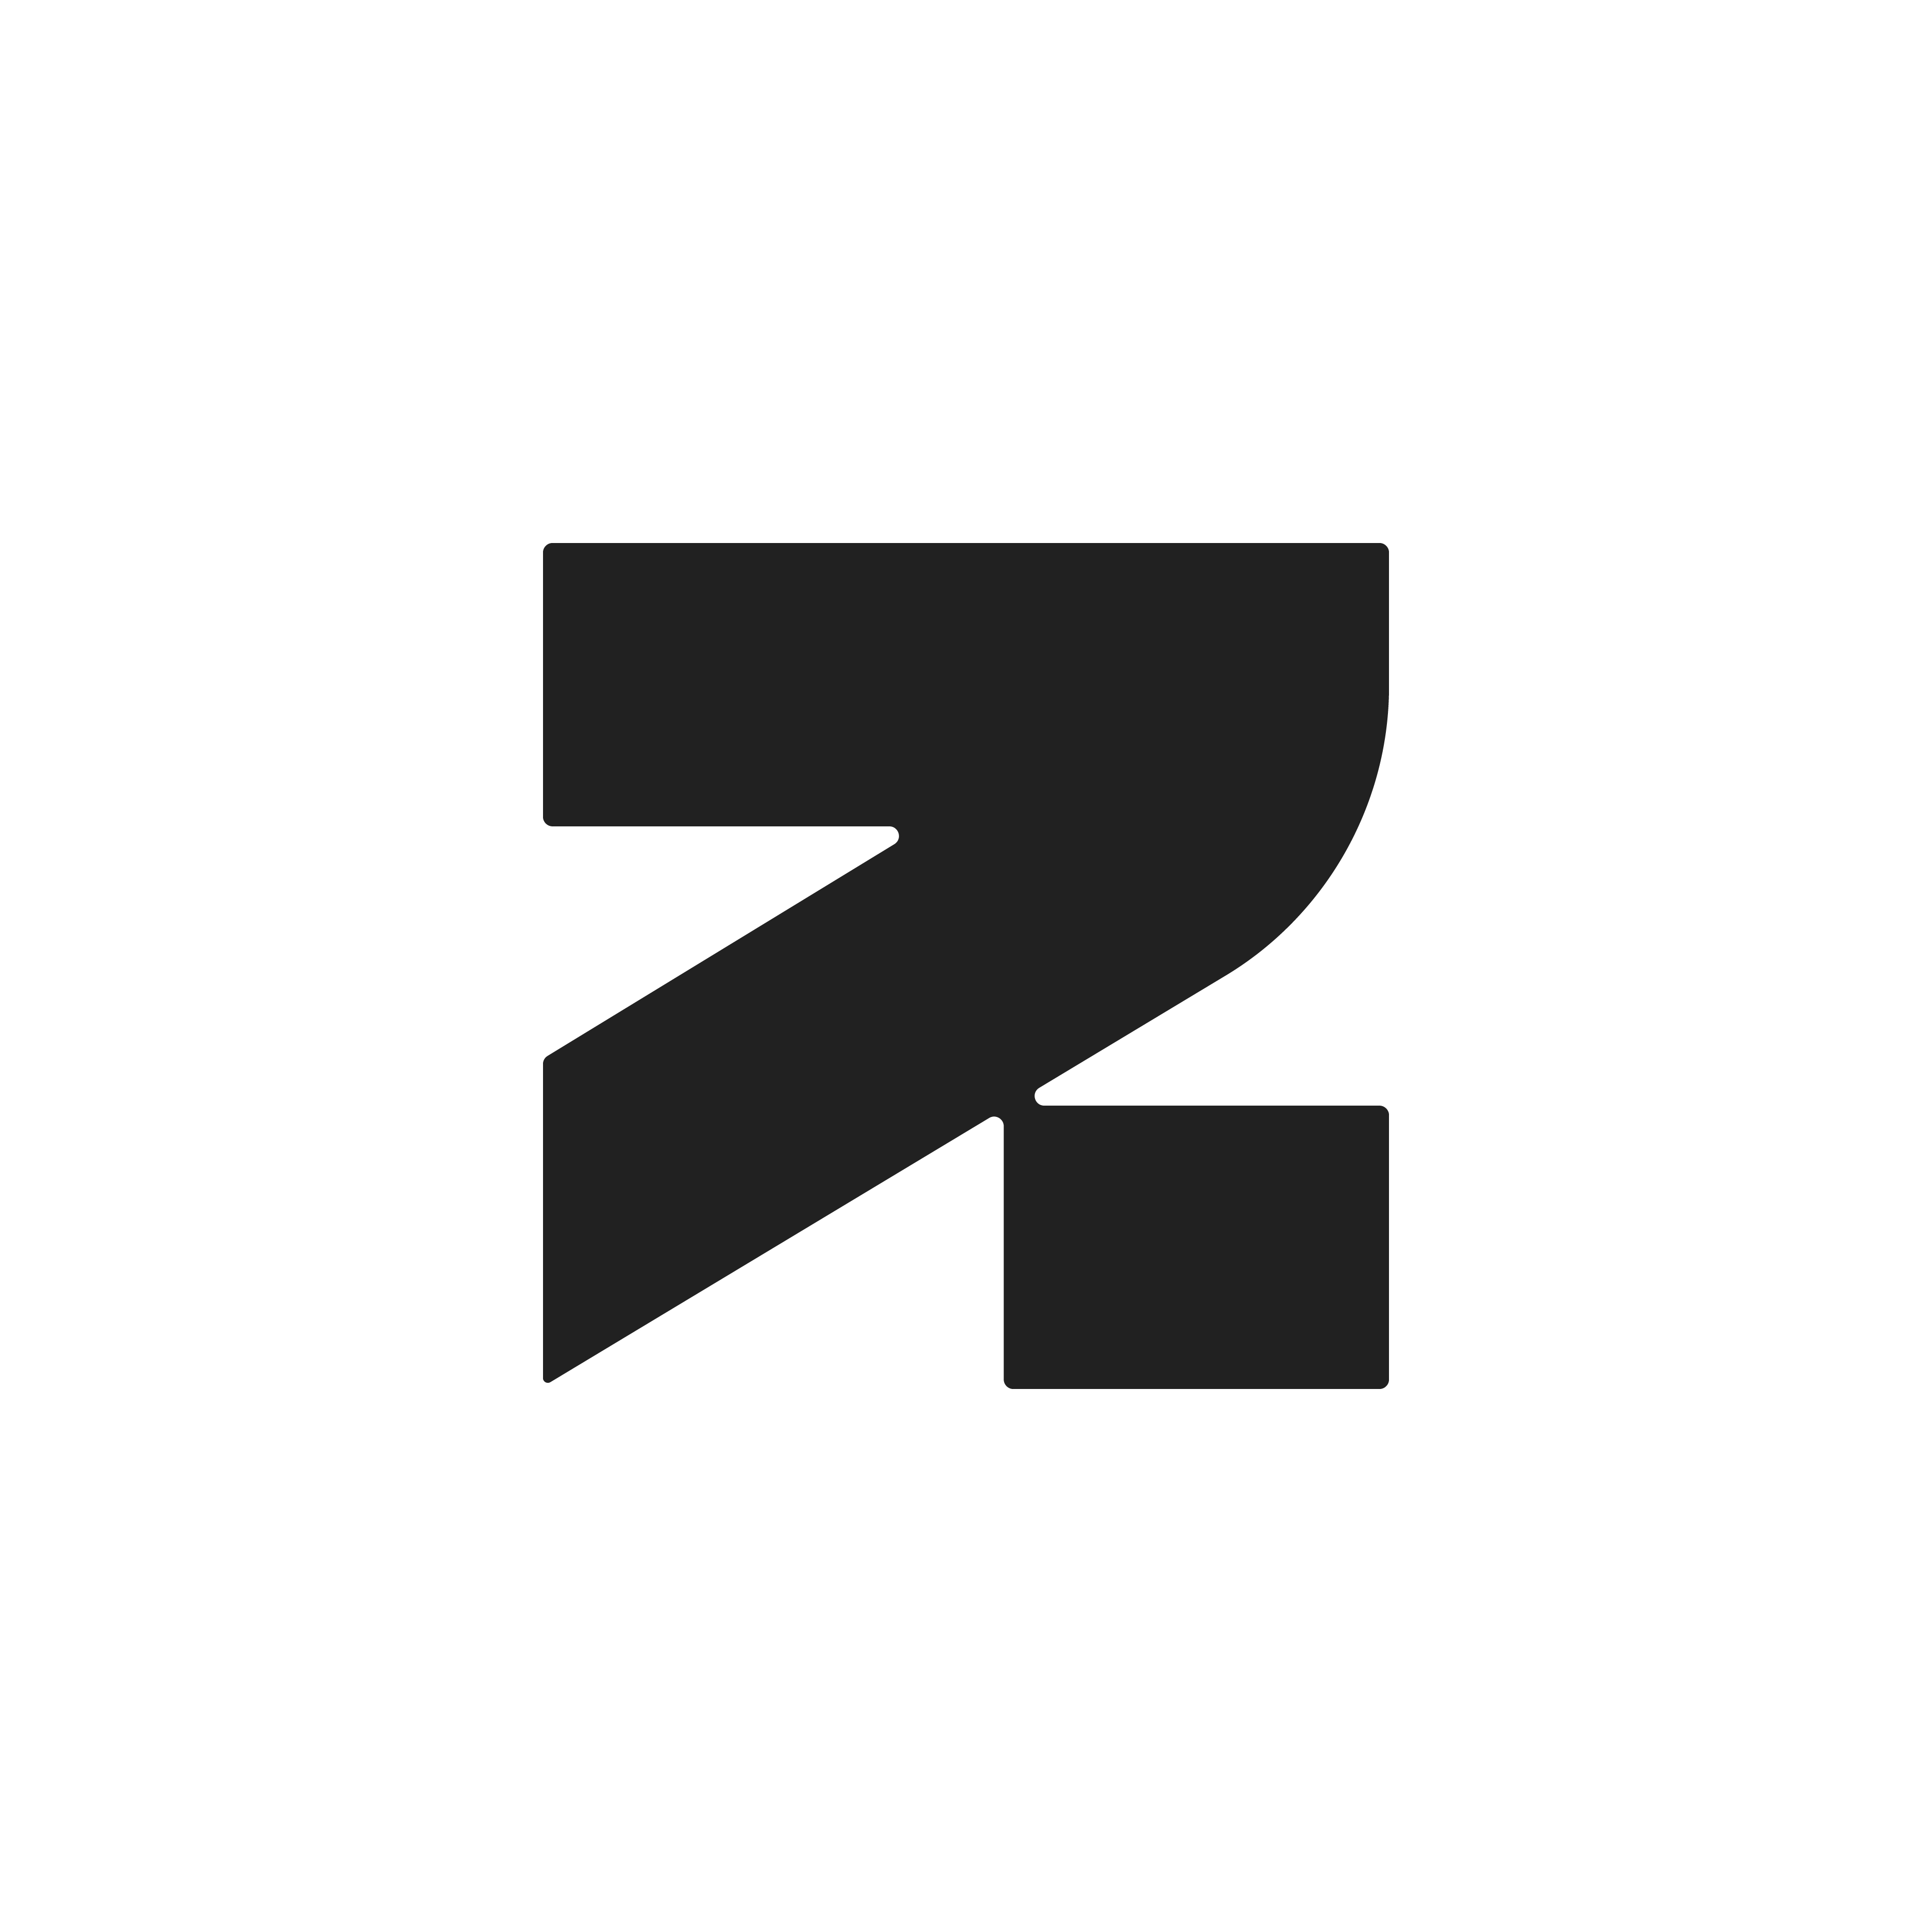 Letter Z logo design by logo designer Francesco Bonetti for your inspiration and for the worlds largest logo competition